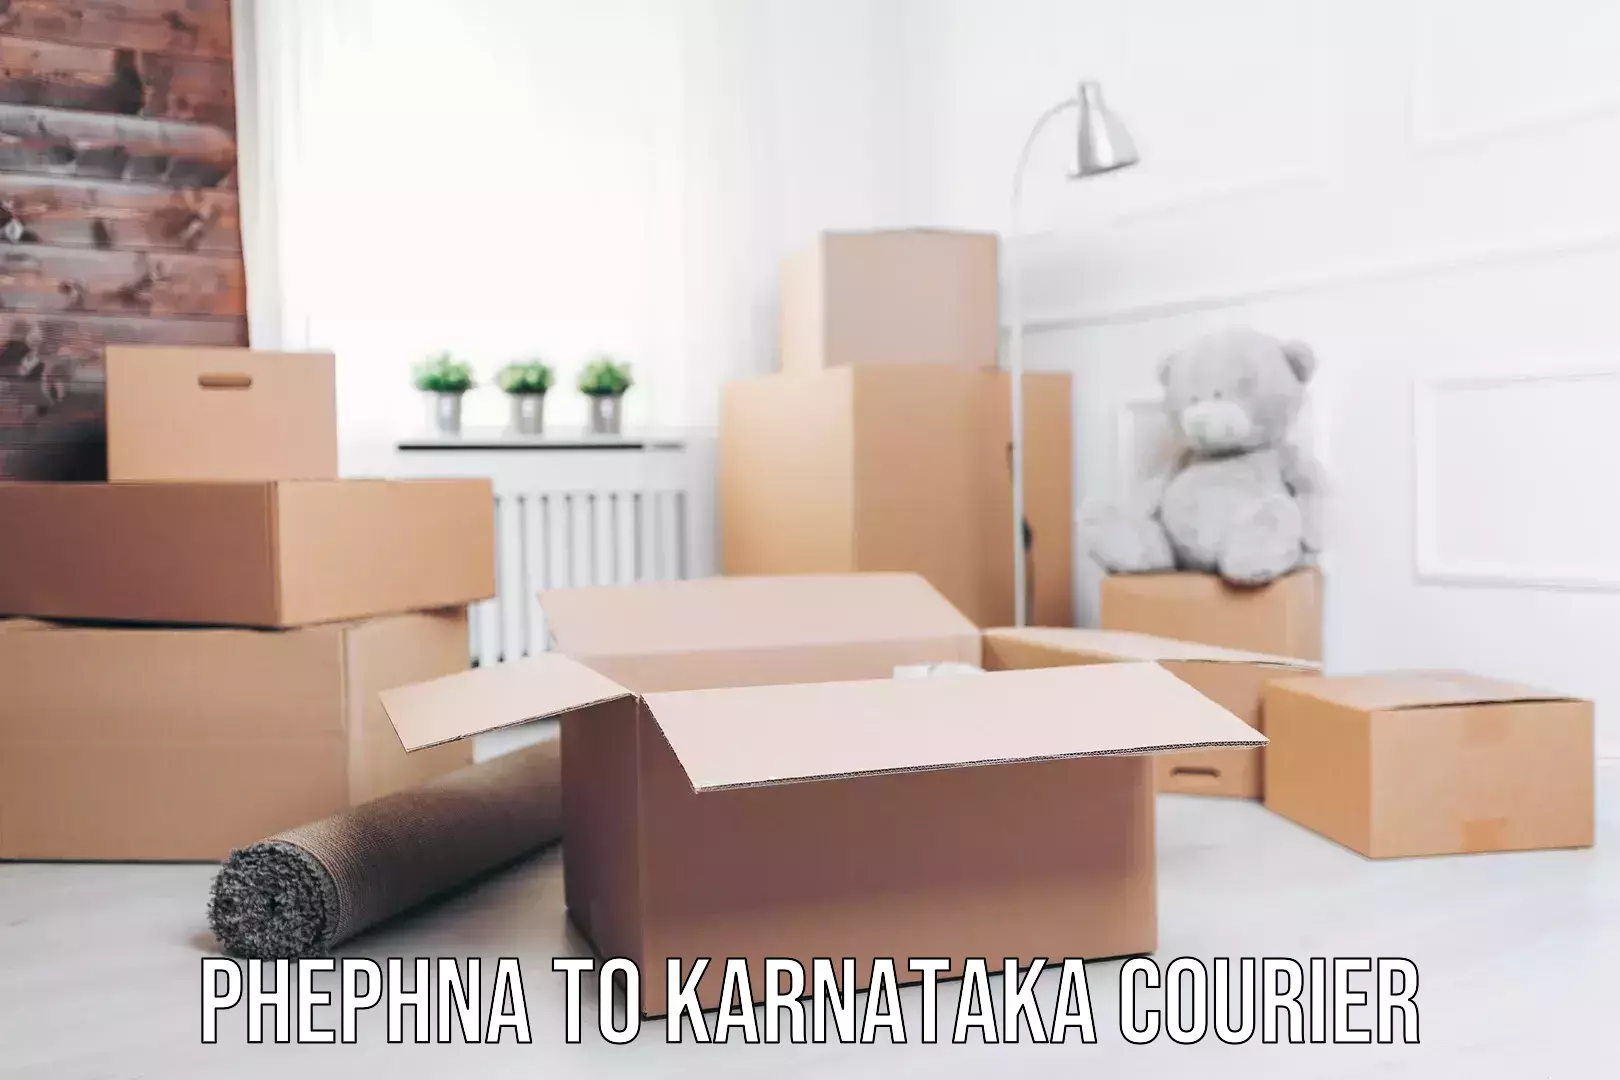 Specialized moving company Phephna to Karnataka